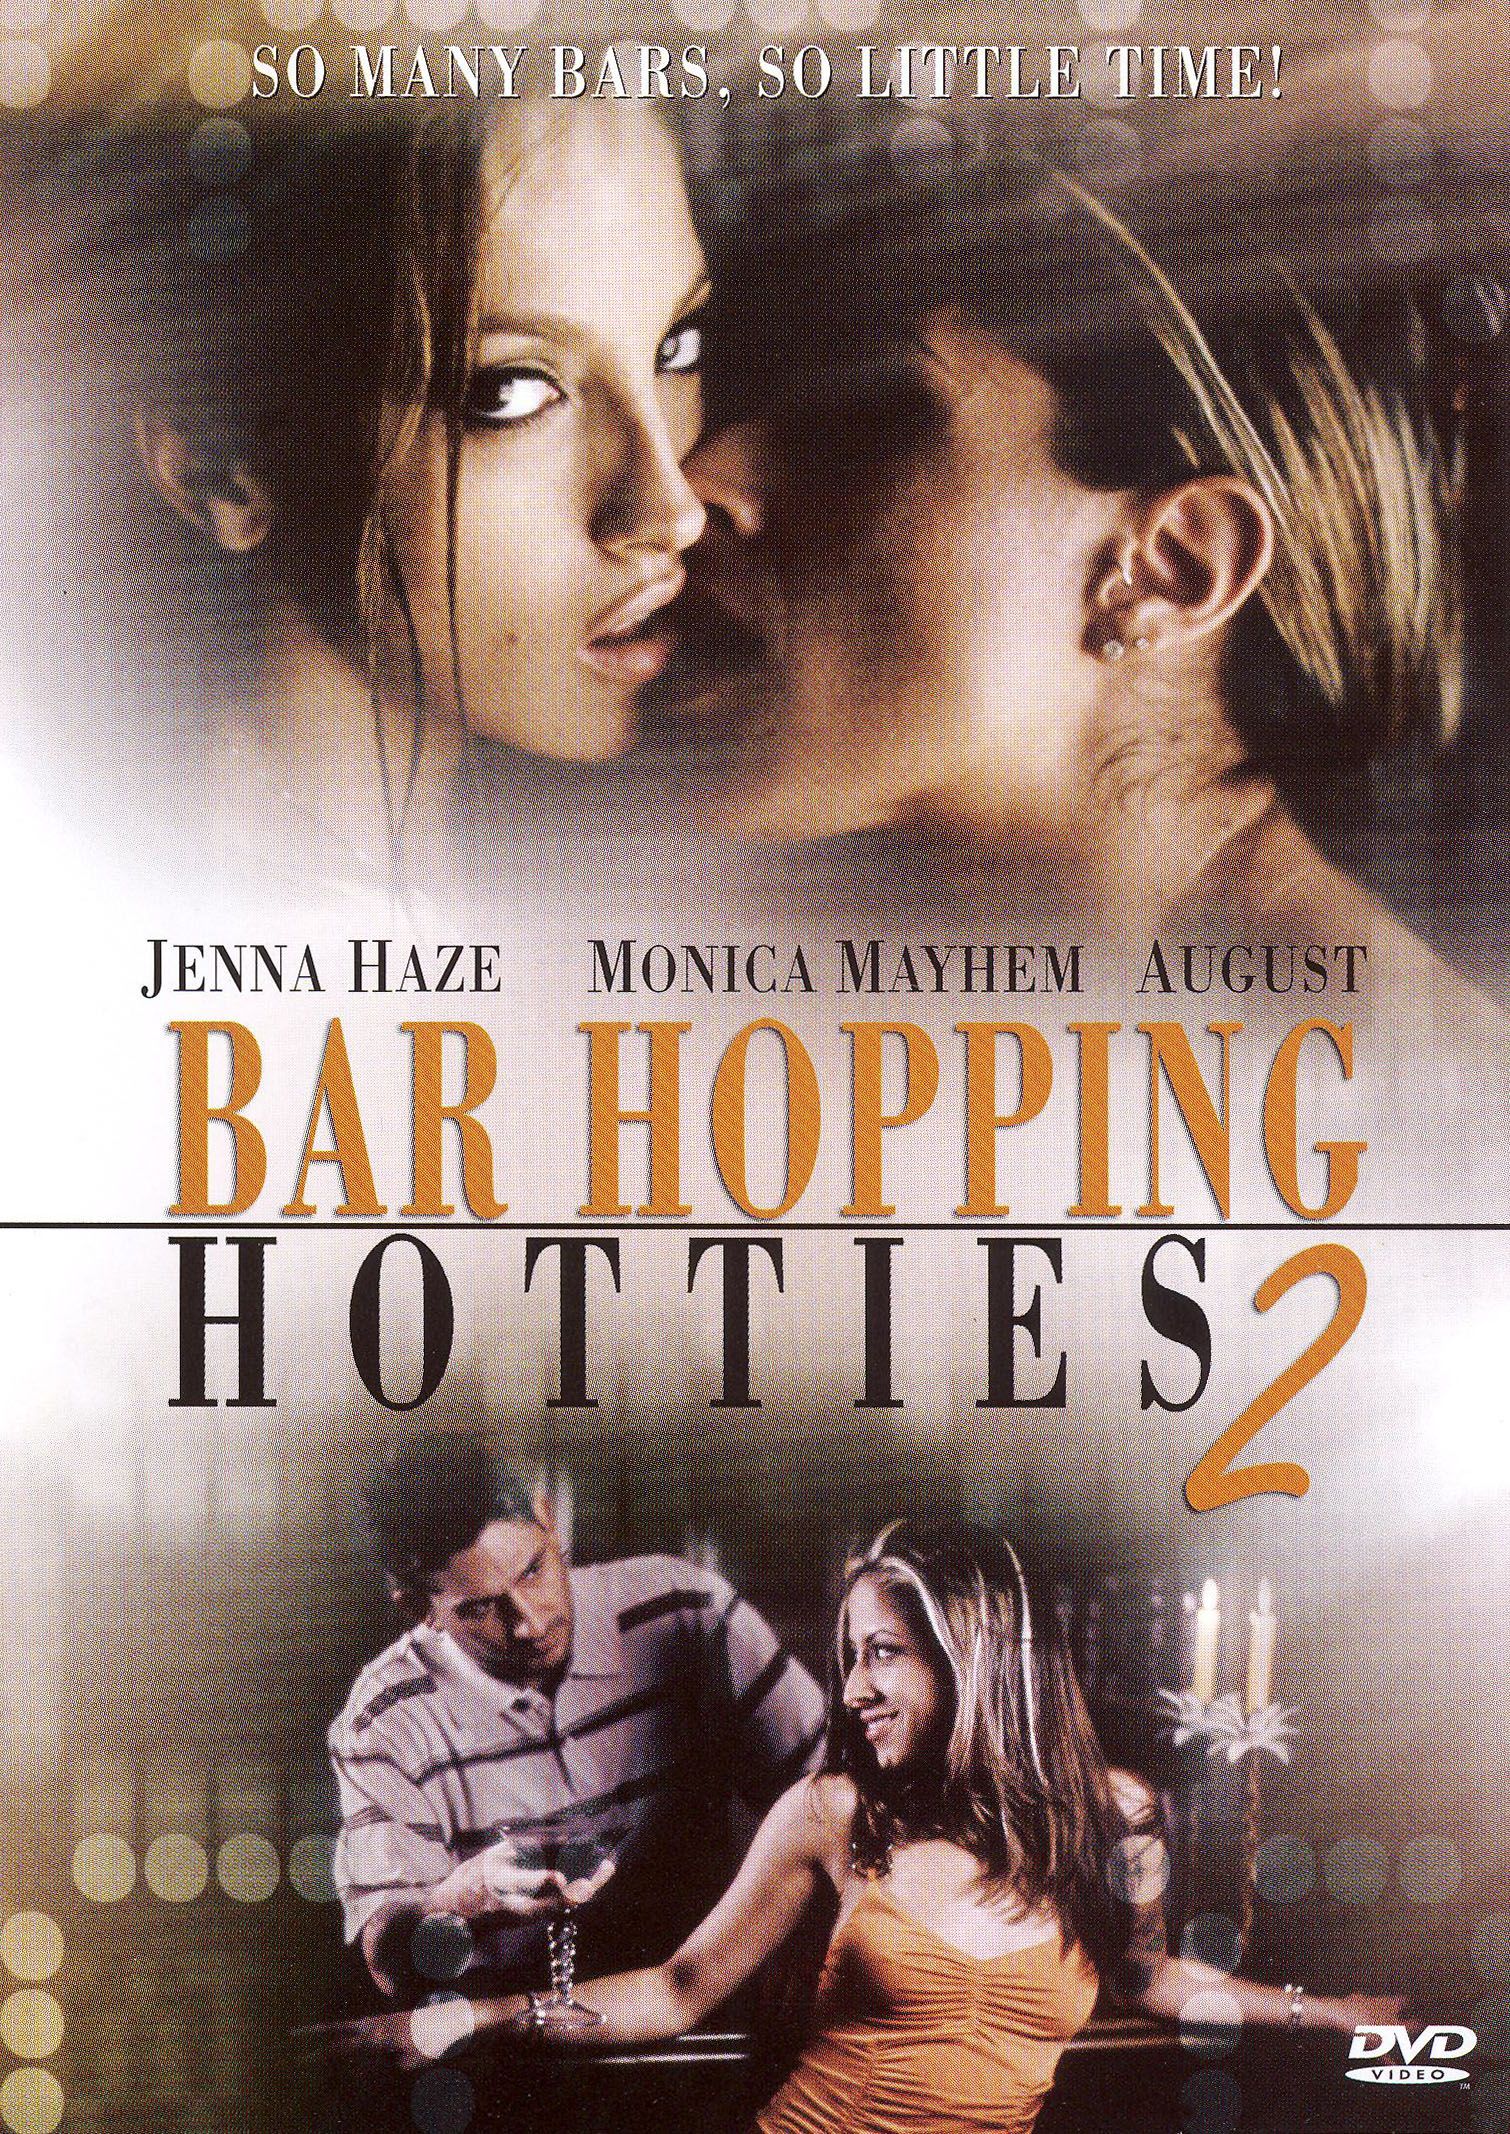 Bar Hopping Hotties 2 (2006) starring Jenna Haze on DVD on DVD